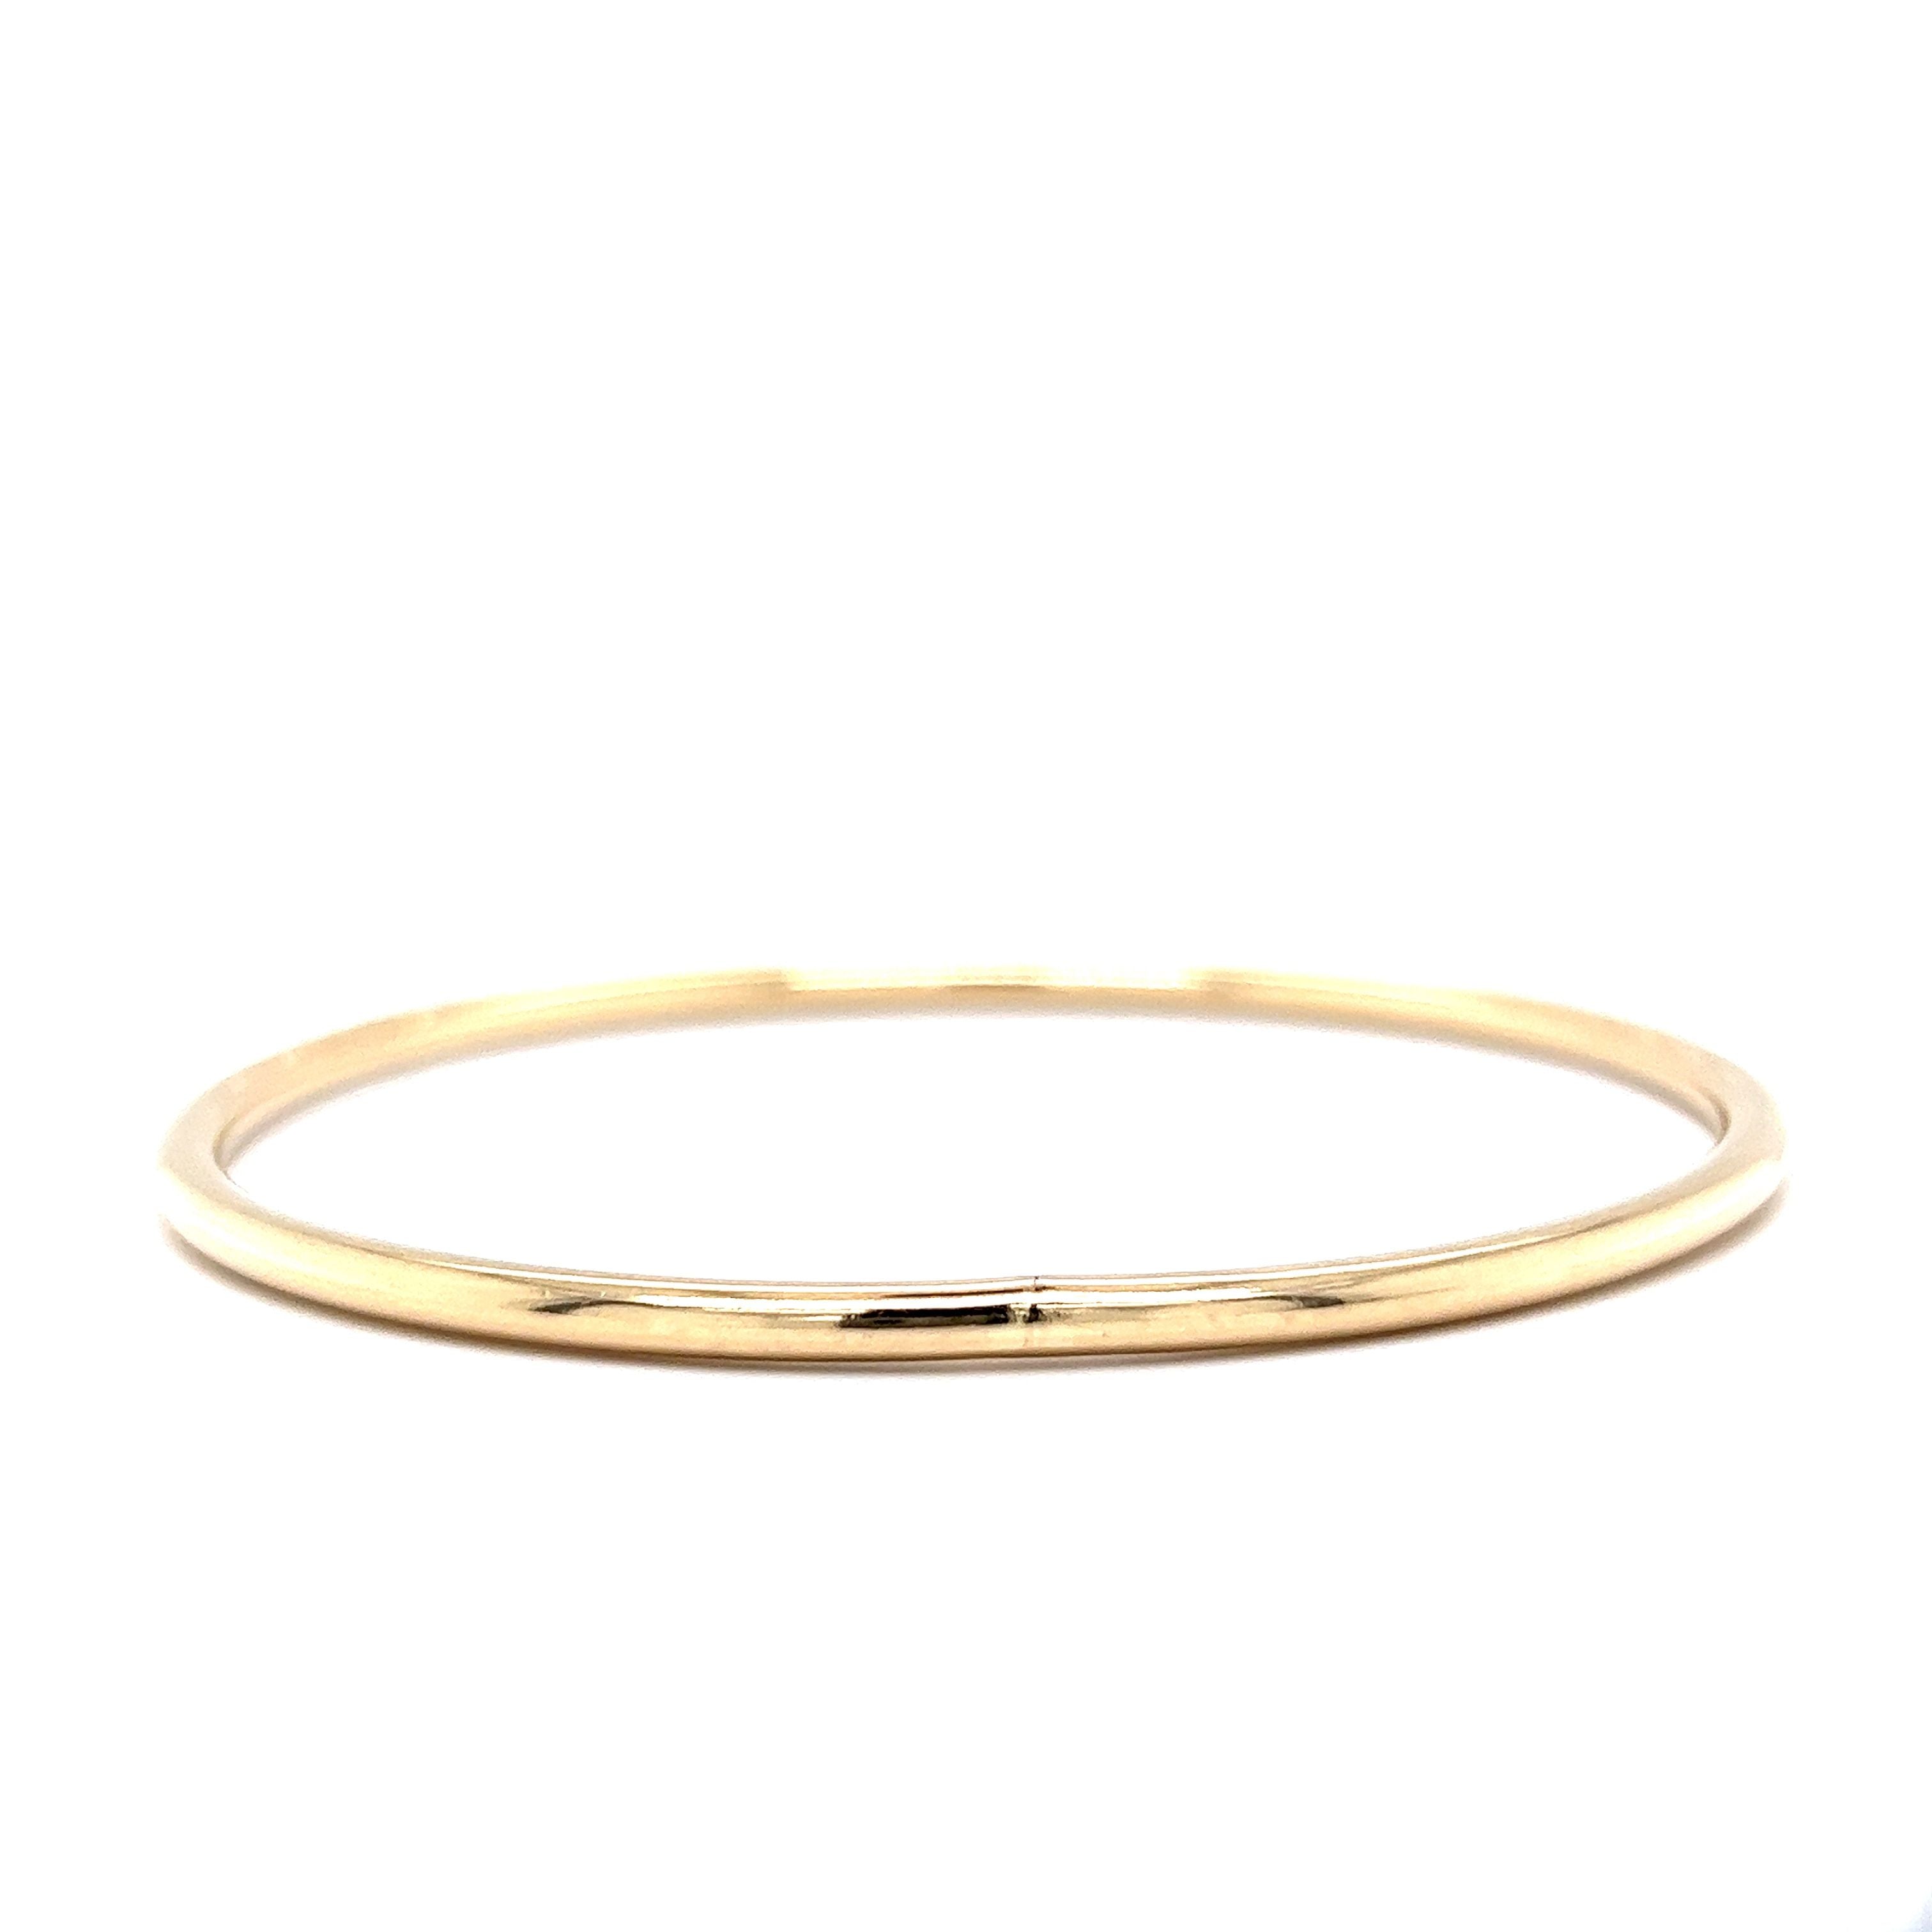 Gold Bangle Bracelet, 50g at Rs 100 in New Delhi | ID: 24224110448